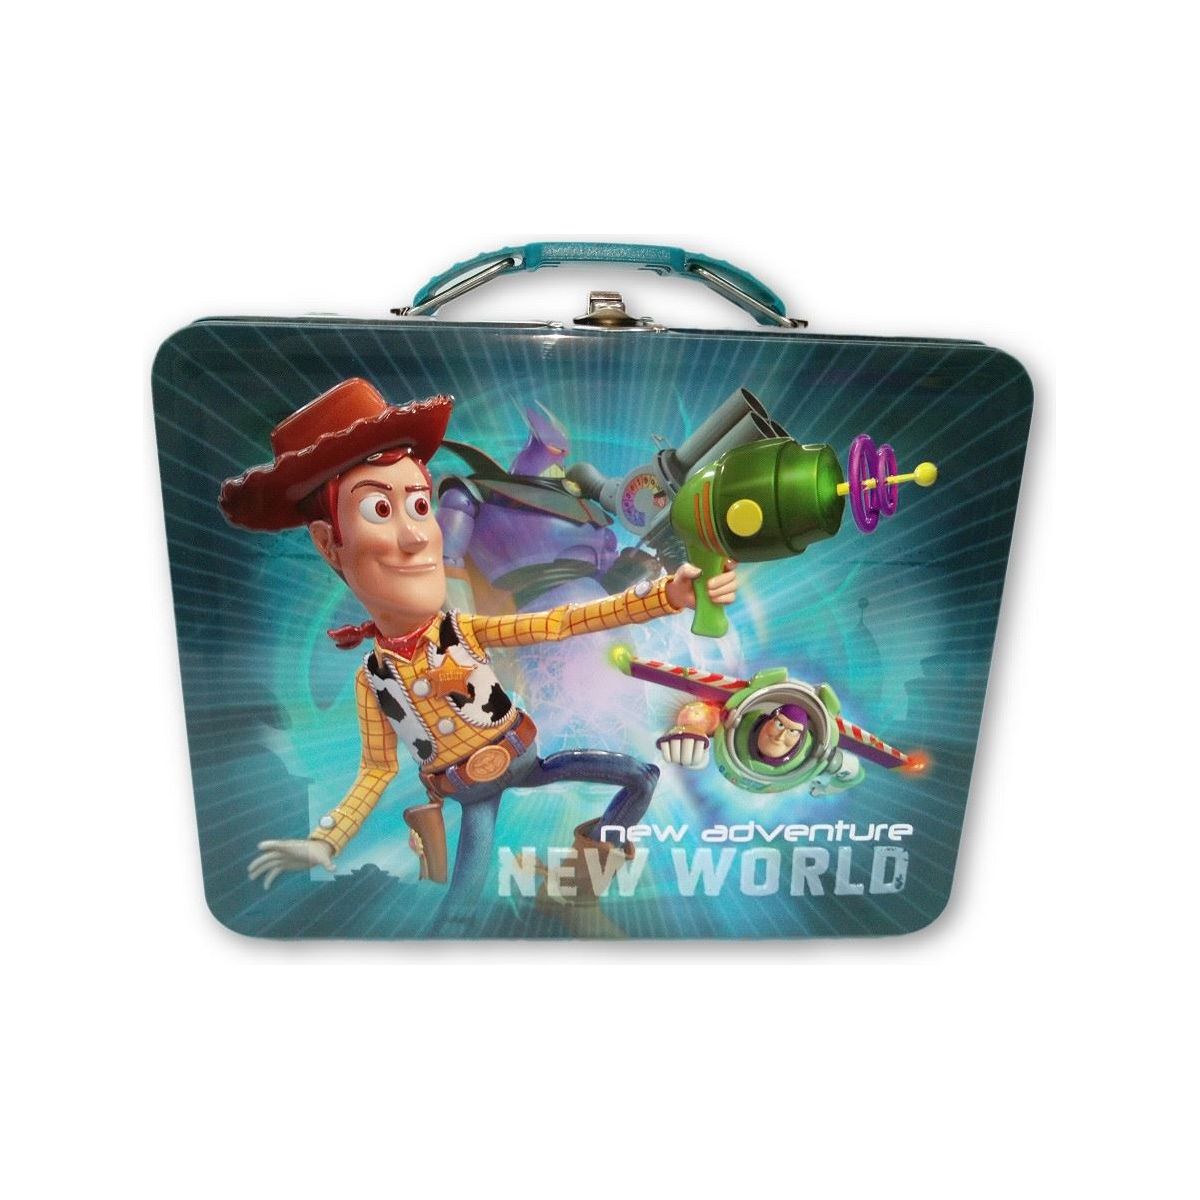 Toy Story Buzz Woody Jessie Square Tin Stationery or Small Lunch Box - "New Adve - Partytoyz Inc